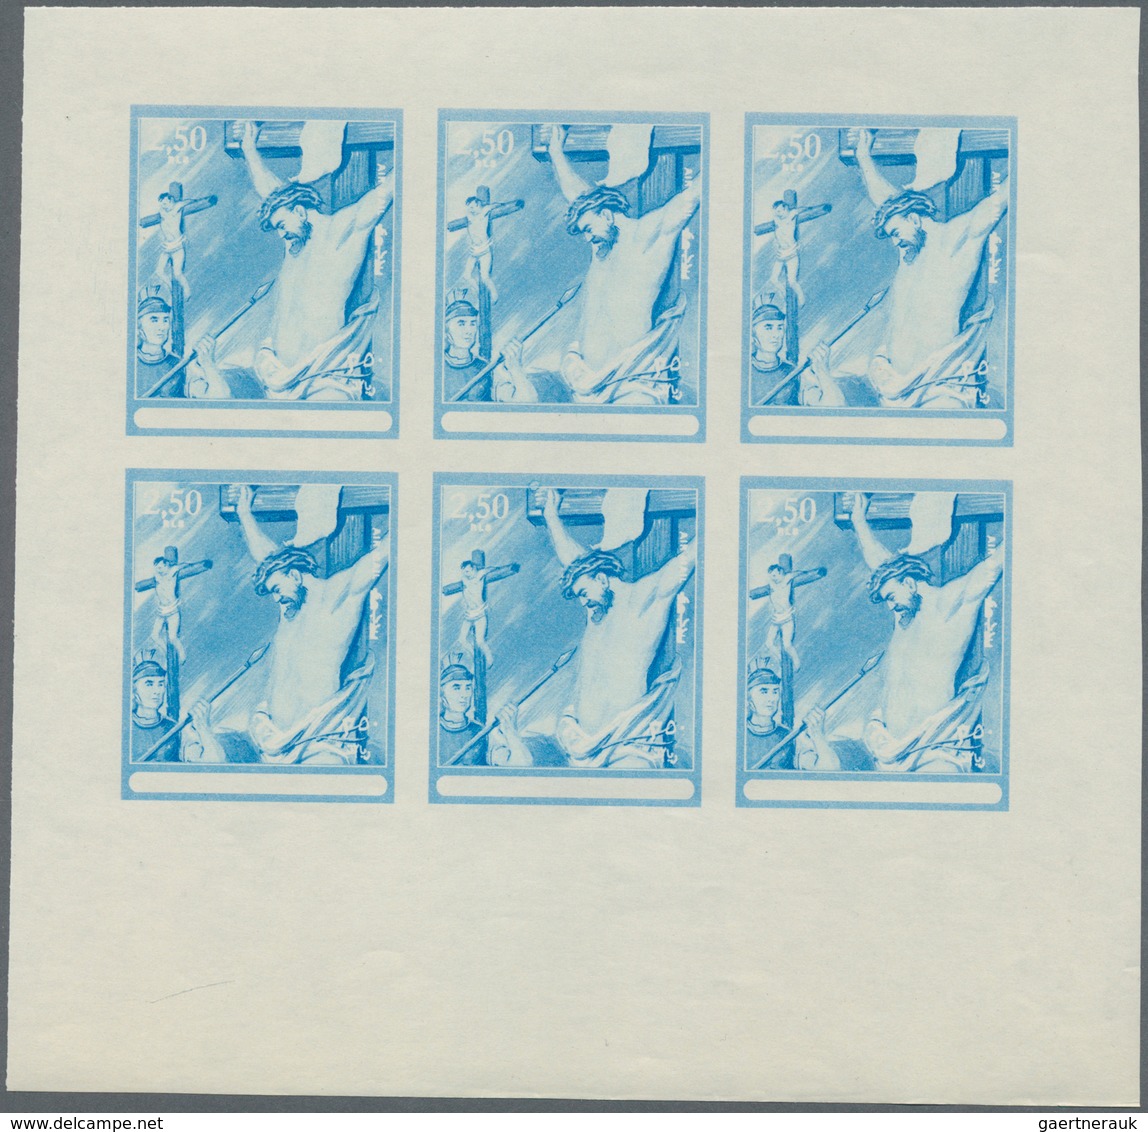 10814 Thematik: Religion / religion: 1970, Fujeira. Progressive proof (7 phases) in miniature sheets of 6